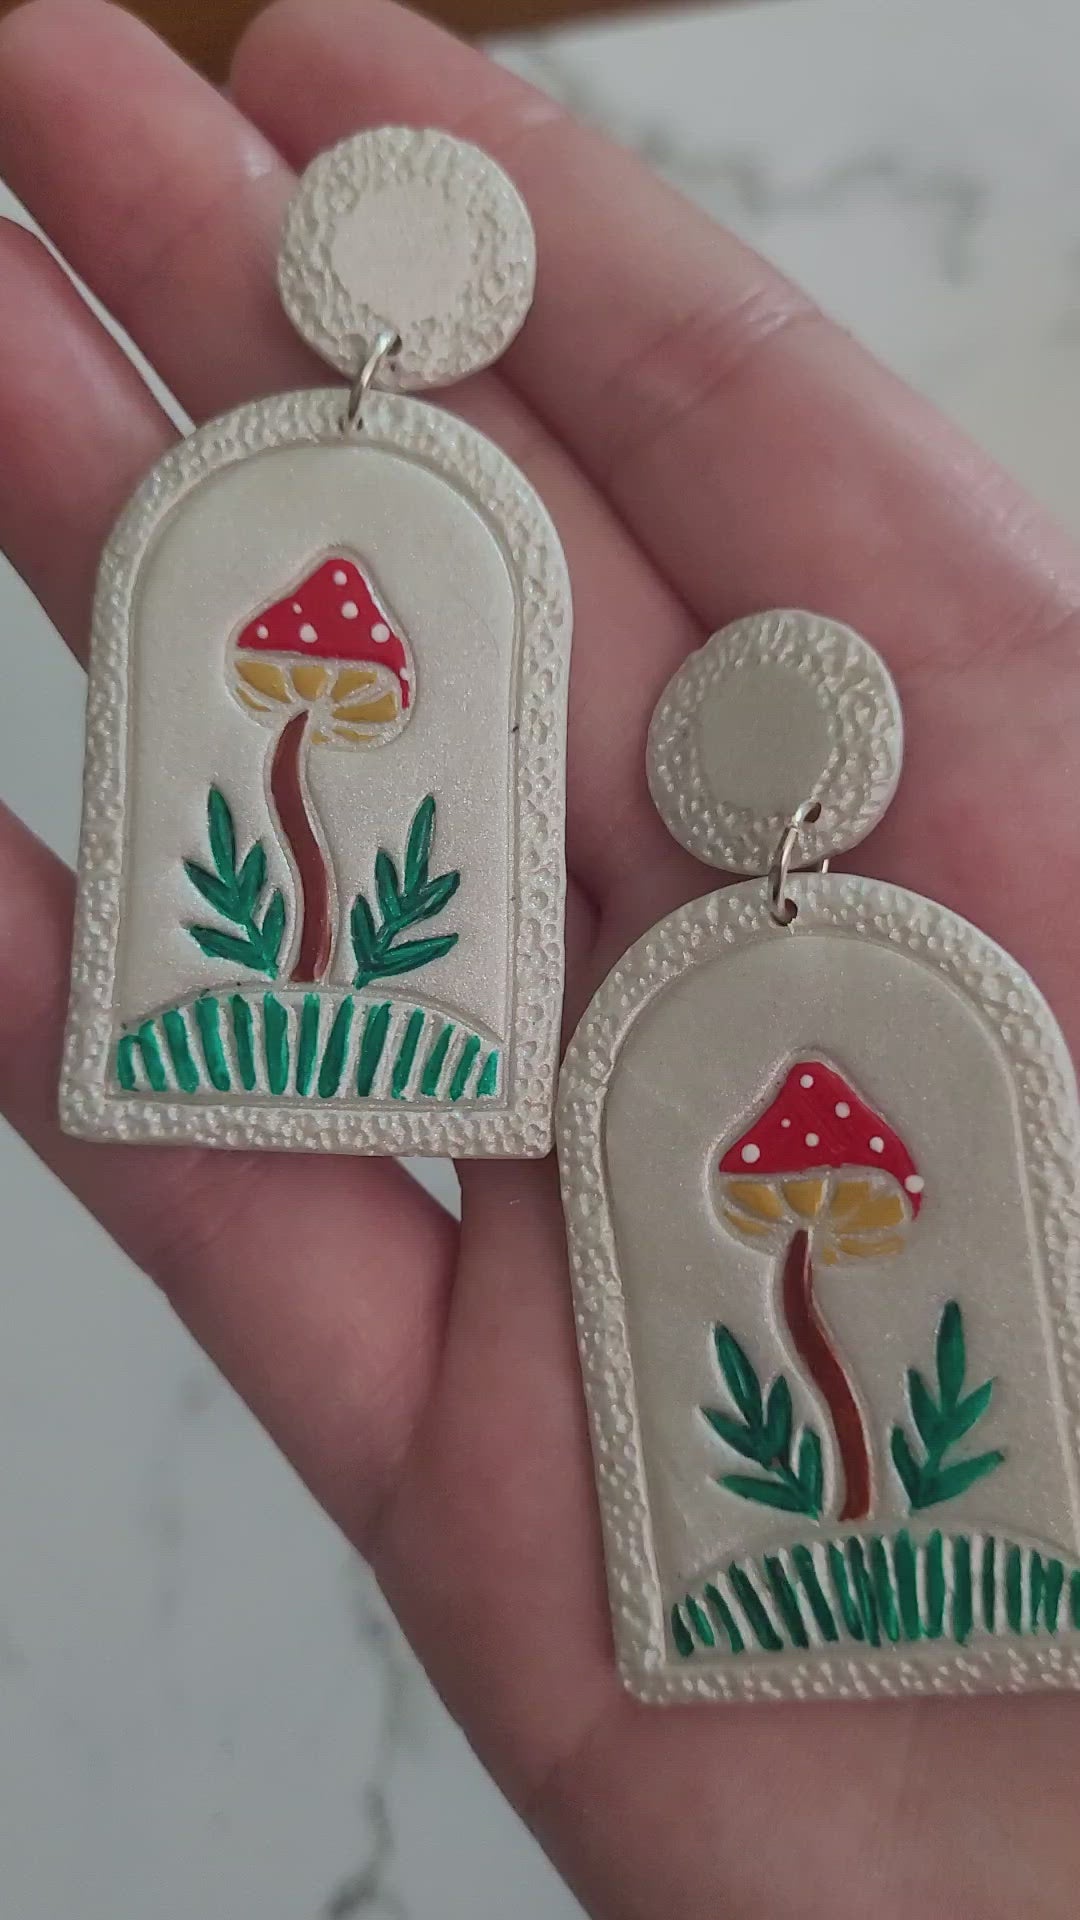 closeup of Pearl earrings with painted mushroom